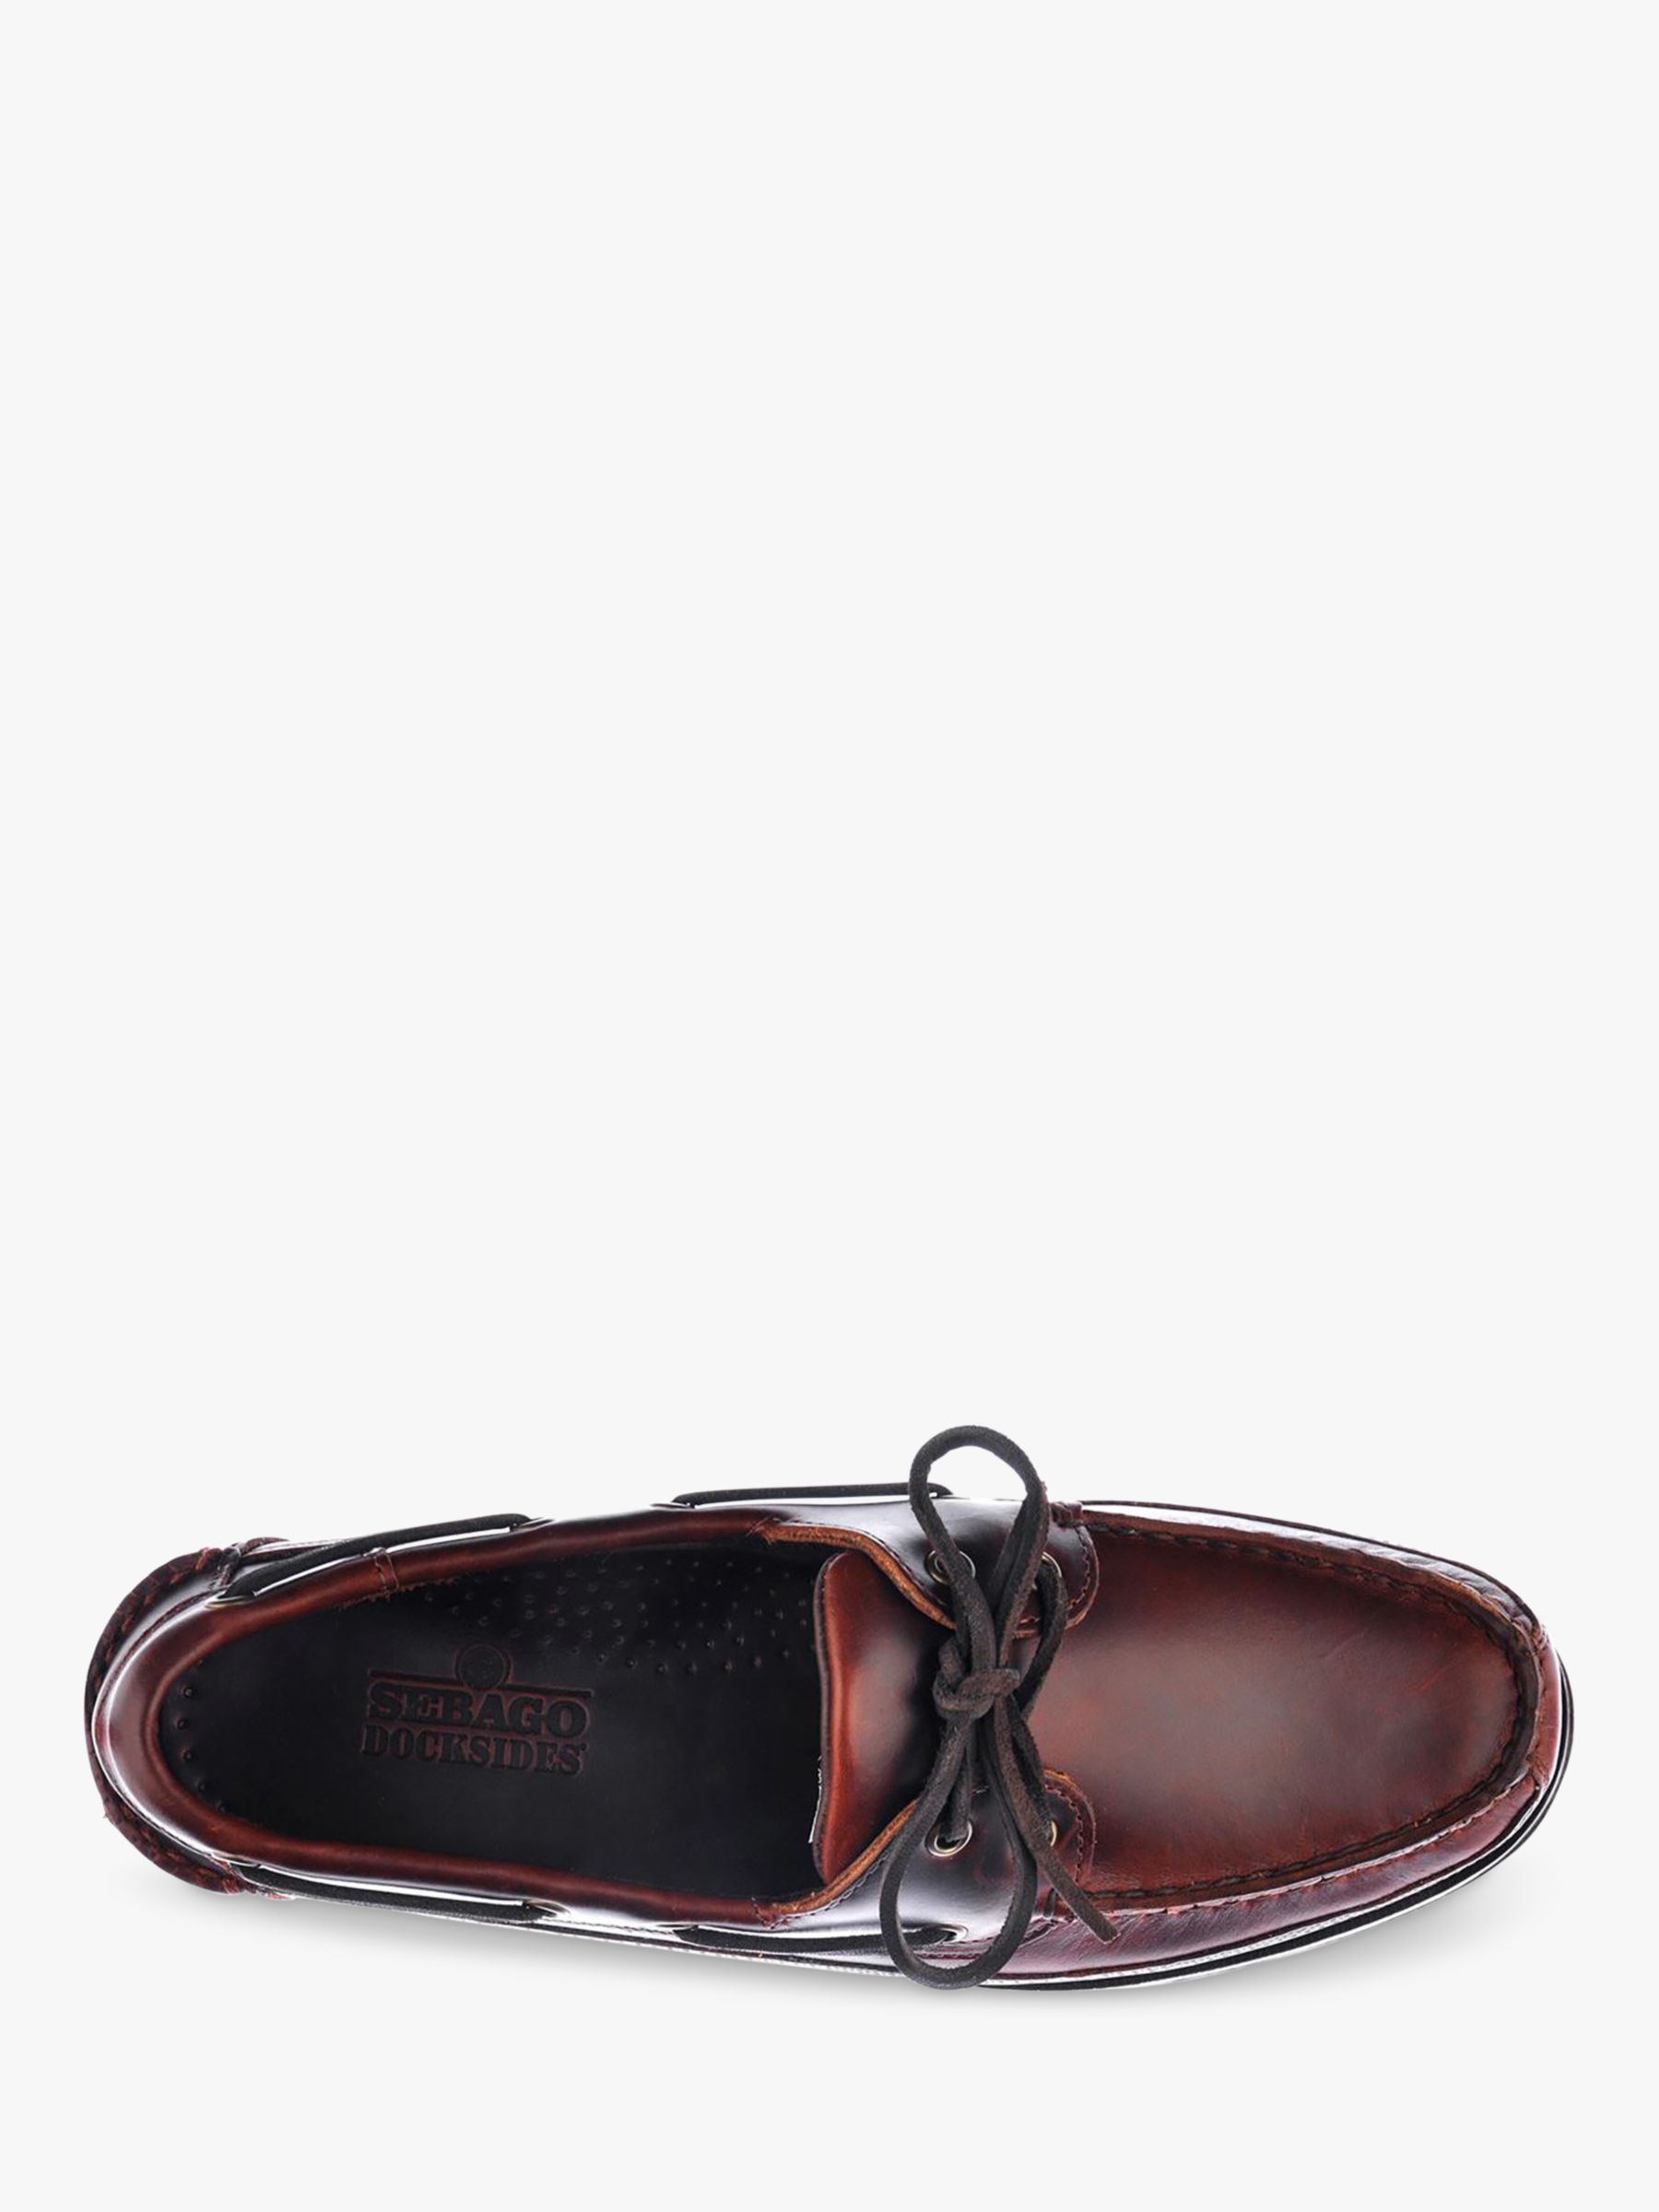 Sebago Schooner Waxed Leather Boat Shoes, Brown Gum, 7